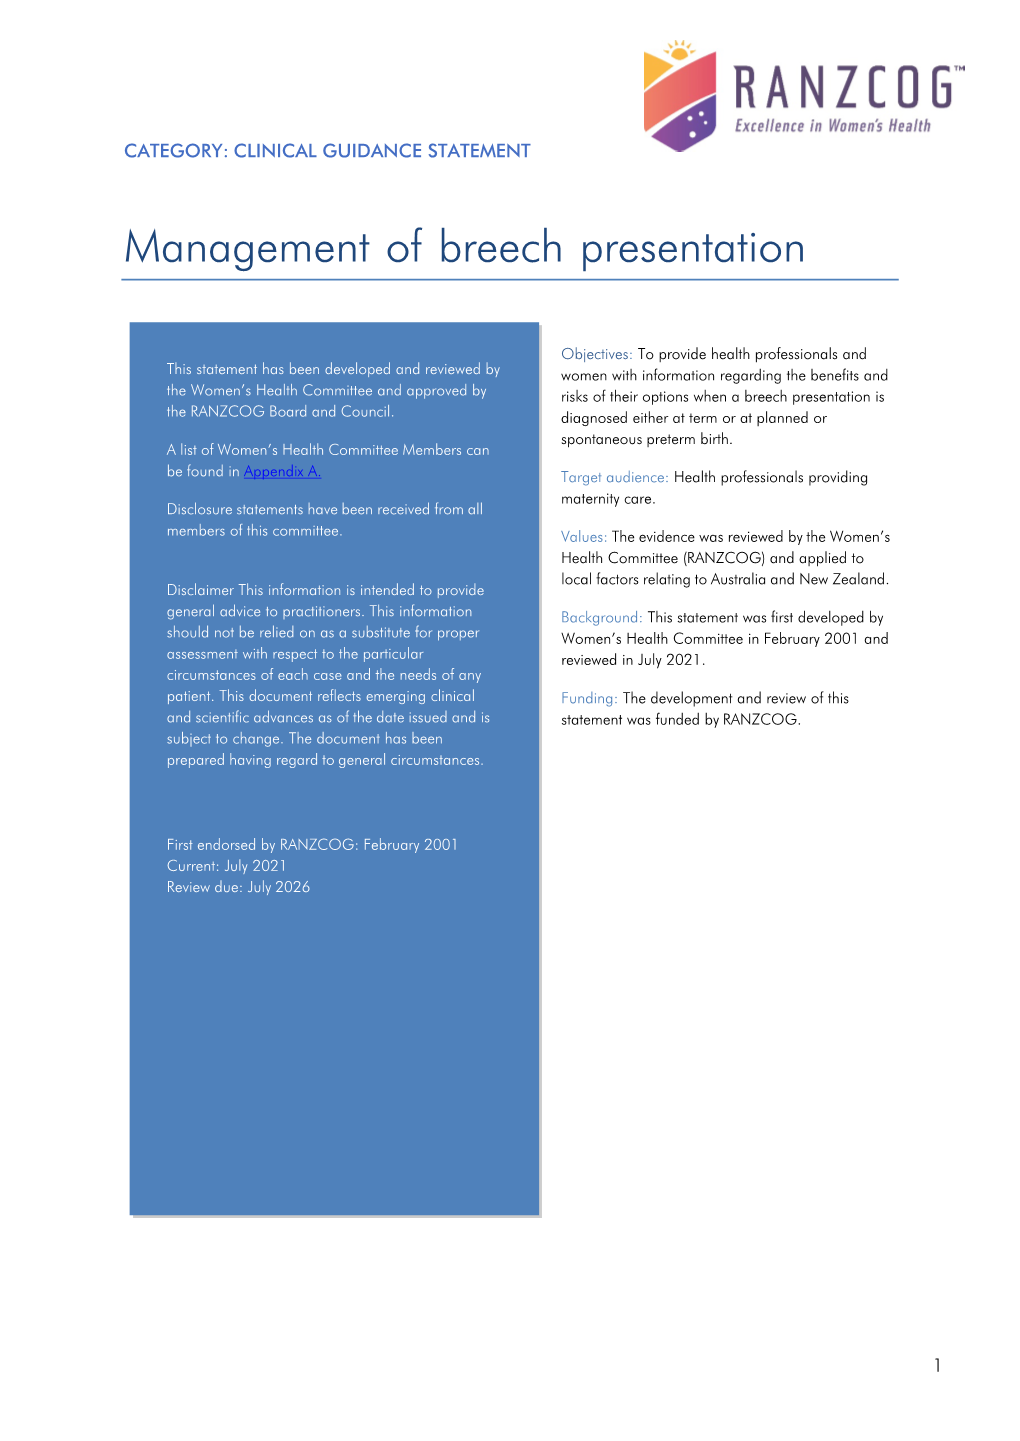 Management of Breech Presentation at Term